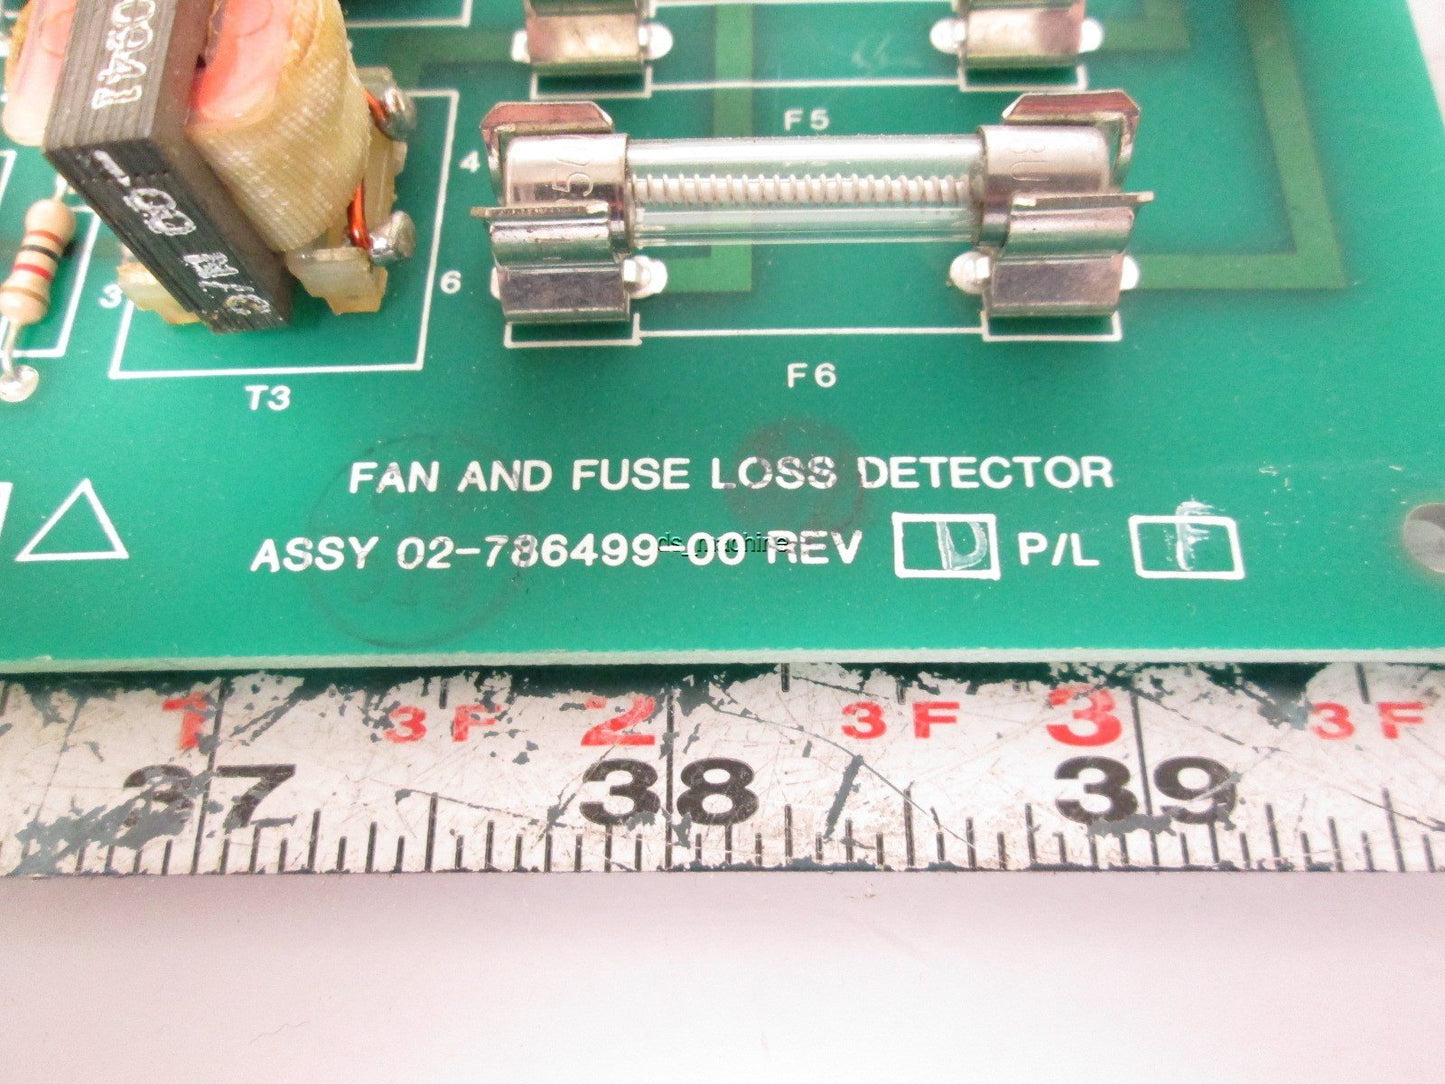 Used Emerson 02-786499-00 Rev. D Fan and Fuse Loss Detector Board